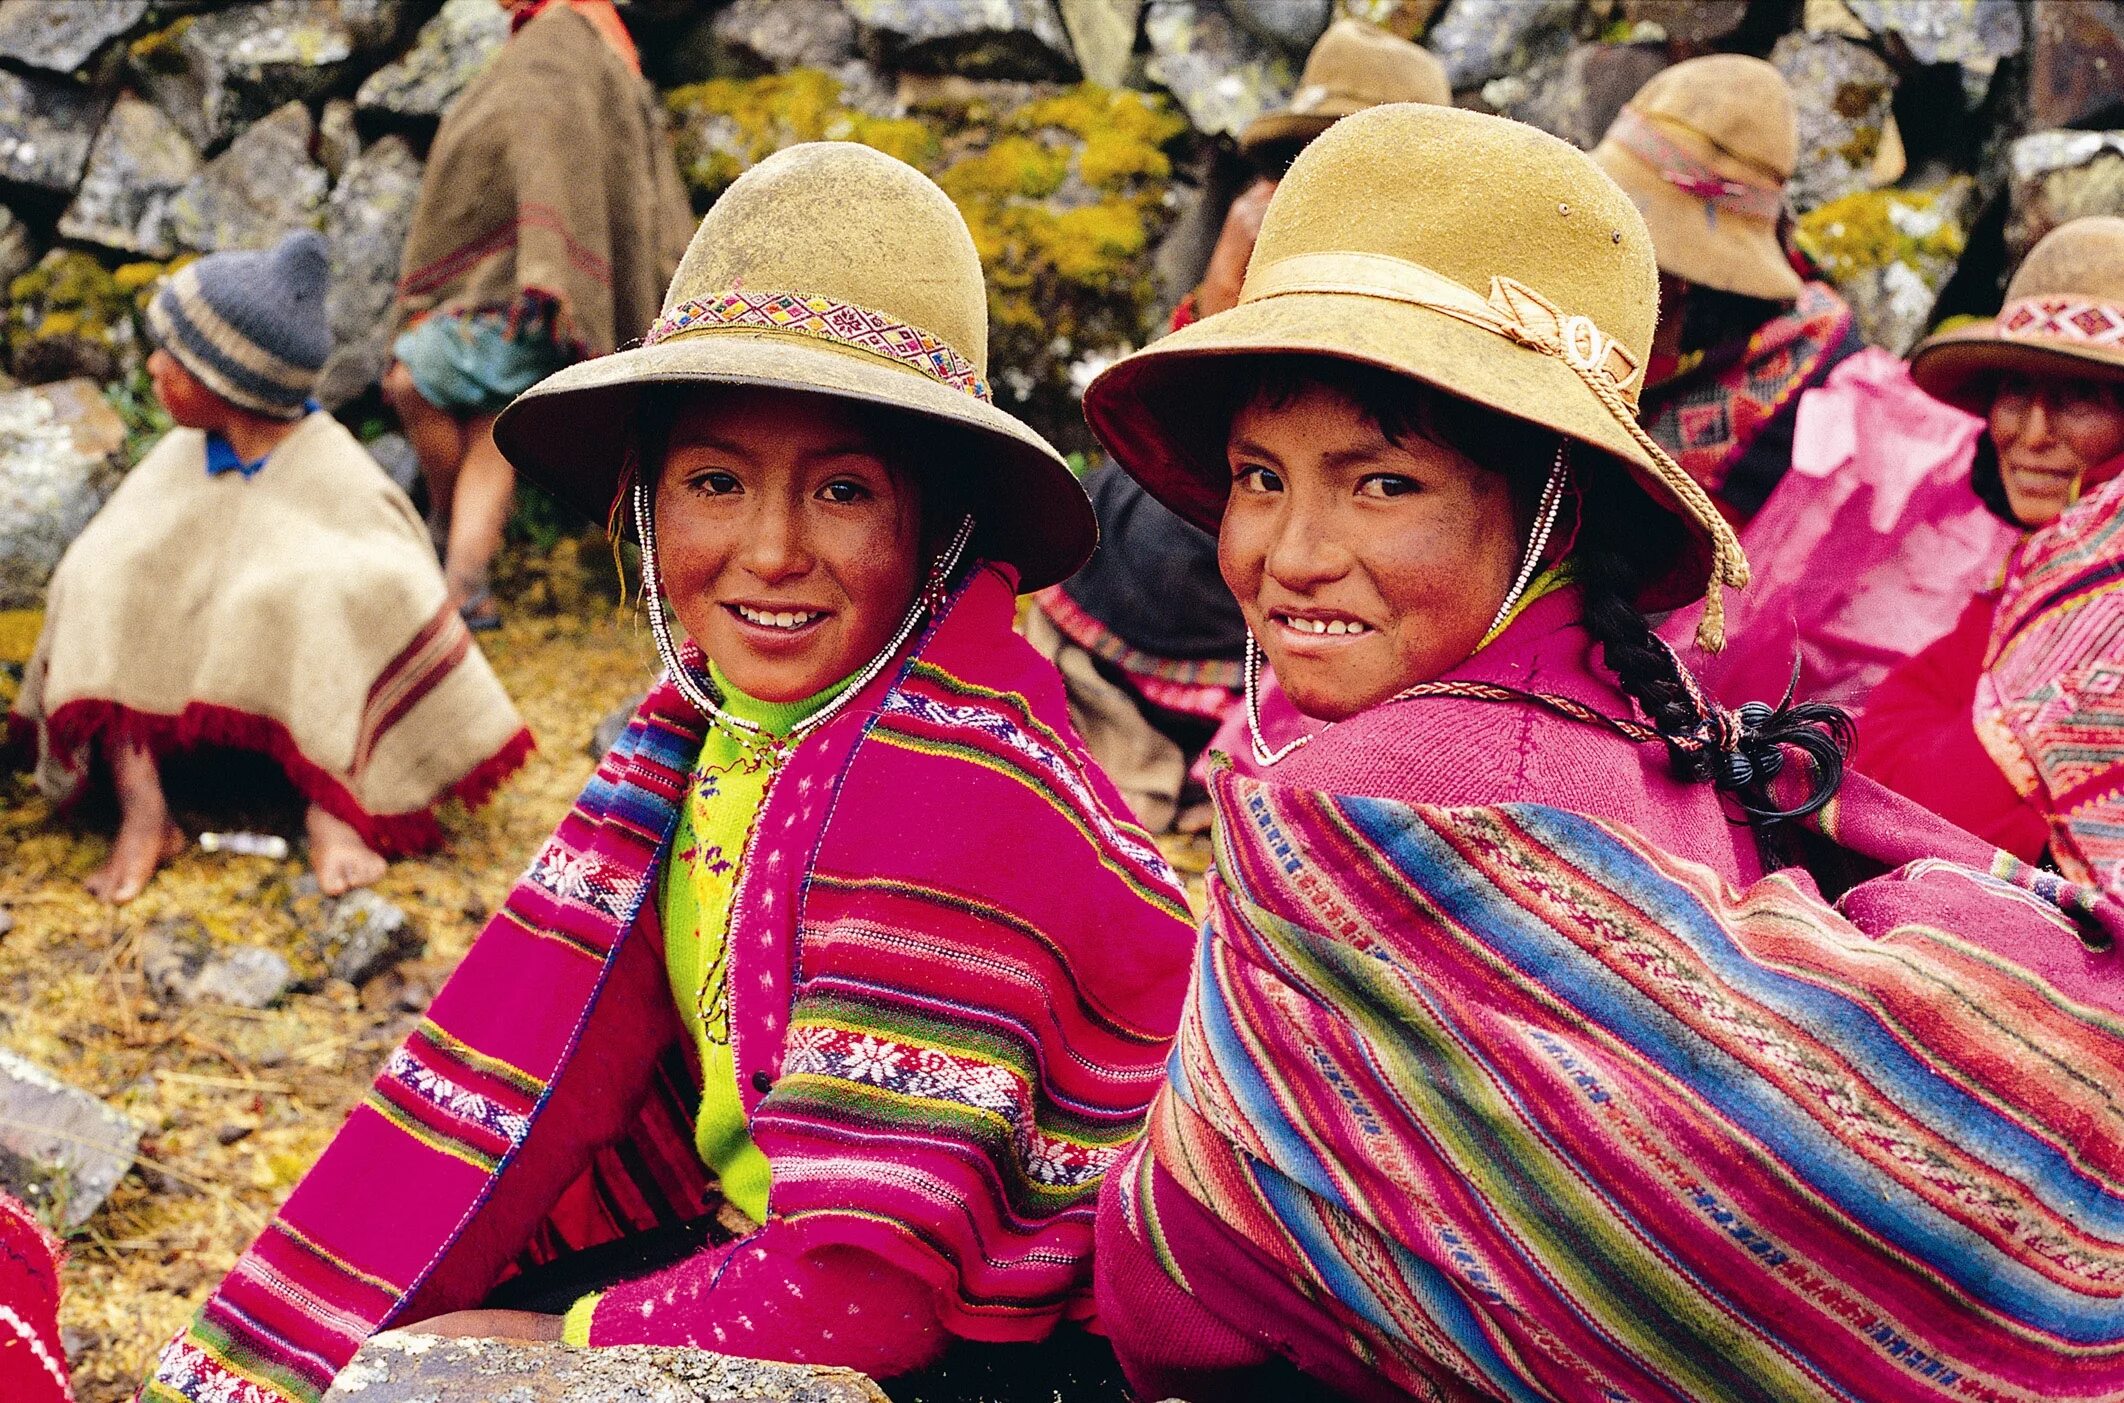 Народы страны перу. Индейцы аймара. Перуанцы латинская Америка. Перуанцы народ Южной Америки. Кечуа народ Южной Америки.